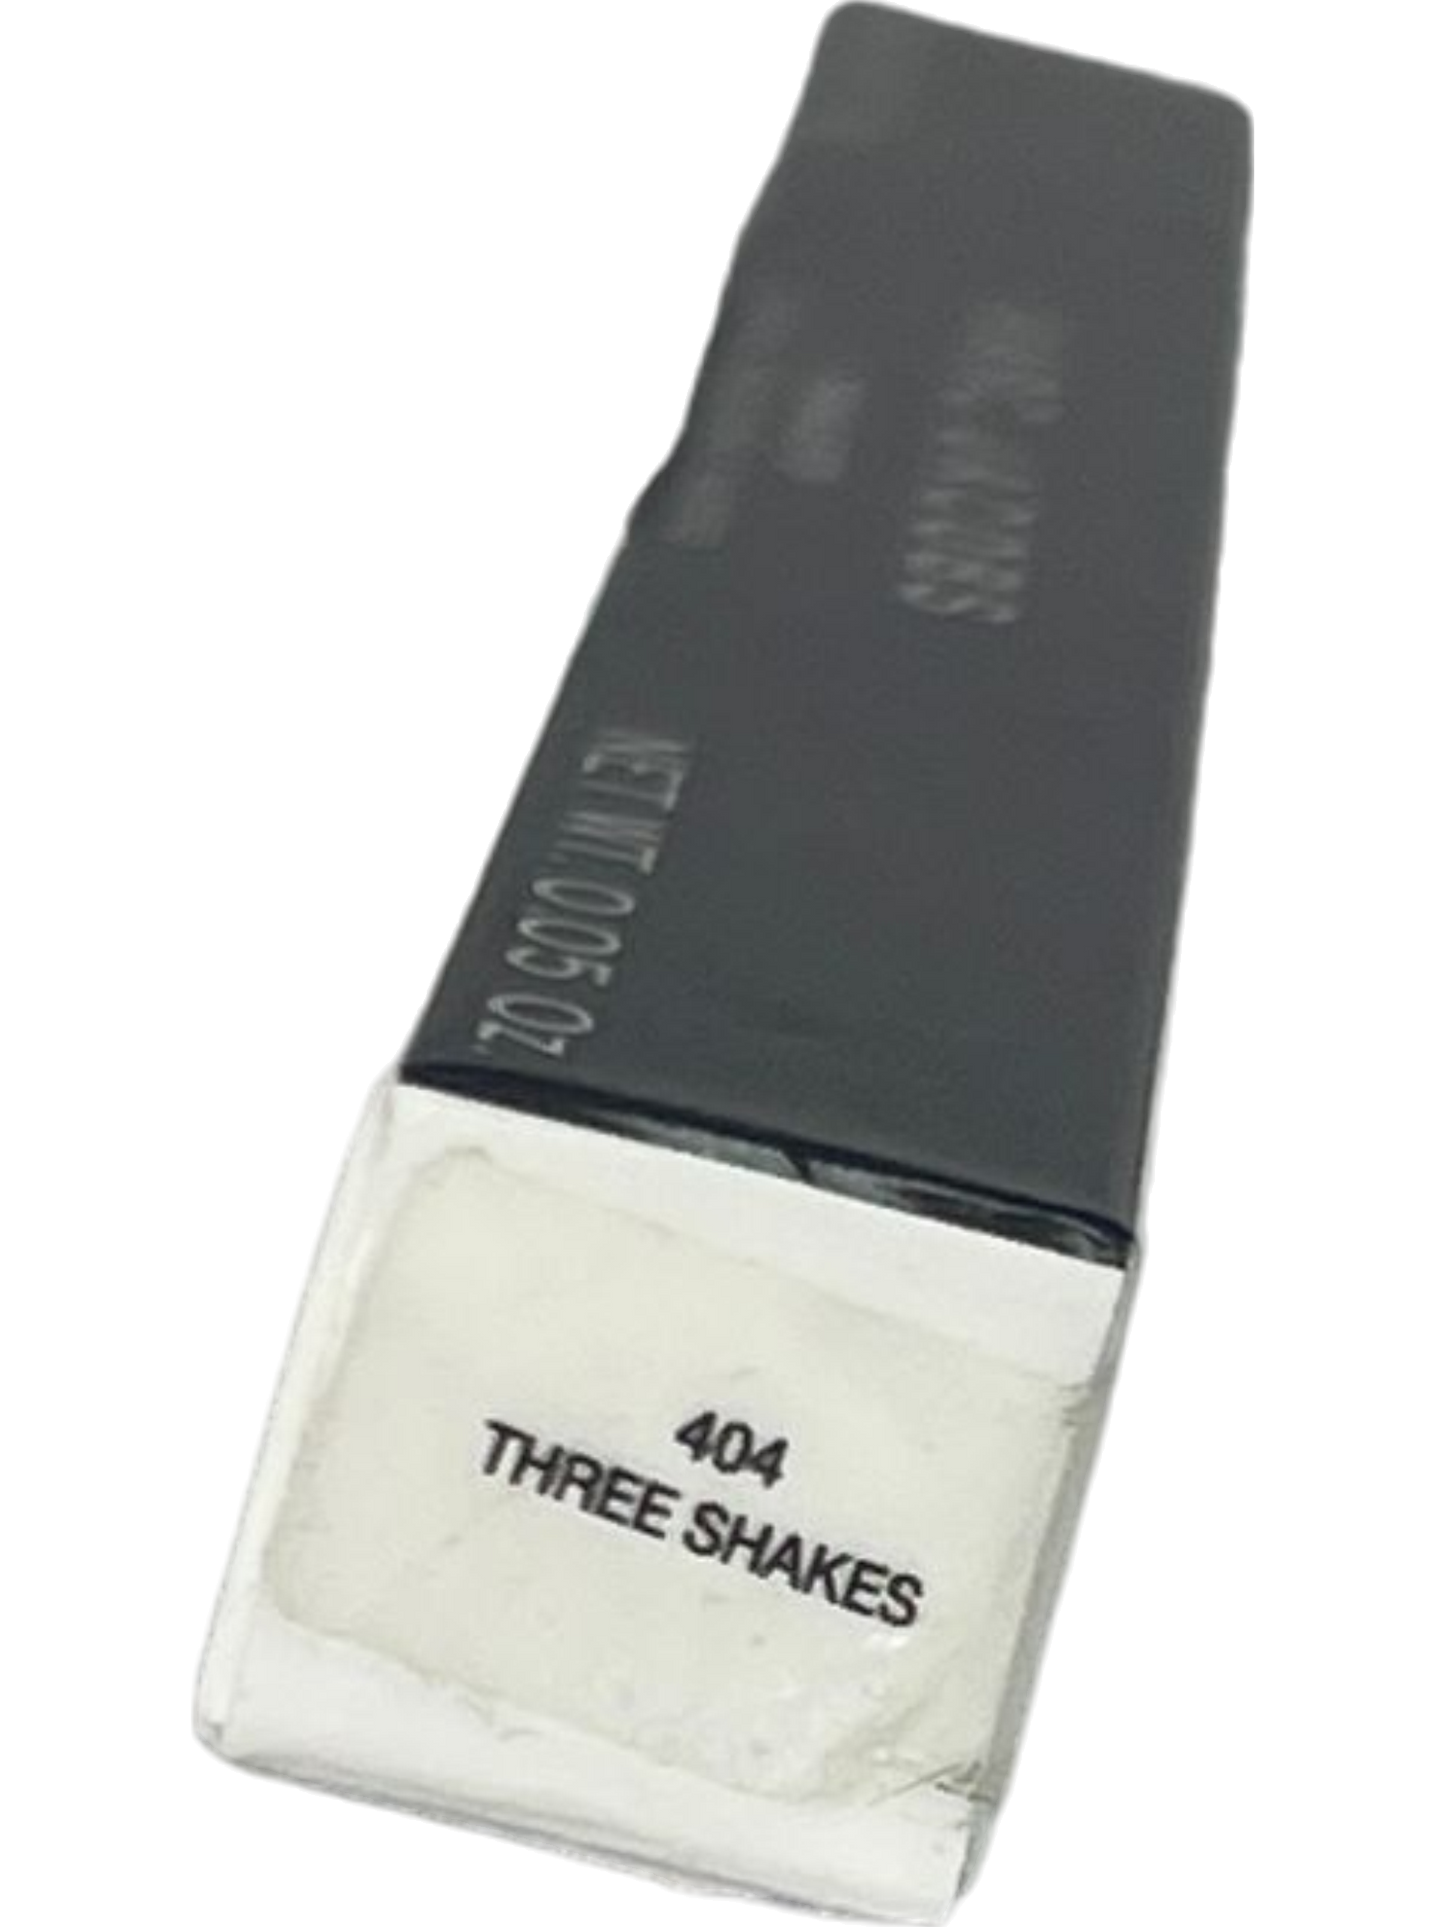 Marc Jacobs 404 Three Shakes Twinkle Pop Eye Shimmer Stick Eyeliner